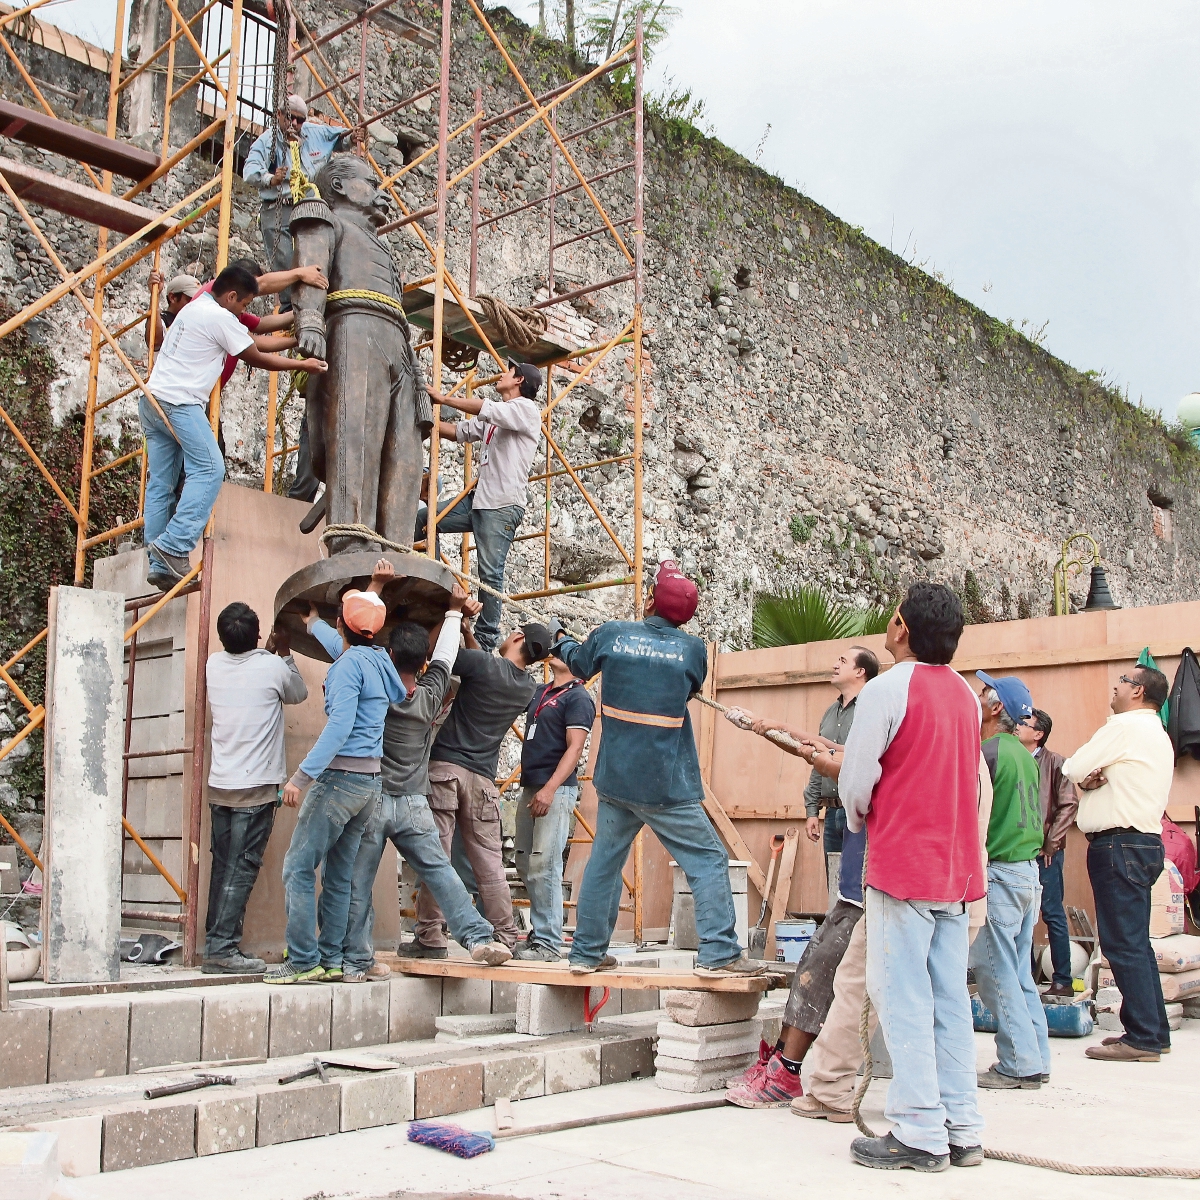 “Primitivo, retirar estatua de Porfirio Díaz” 